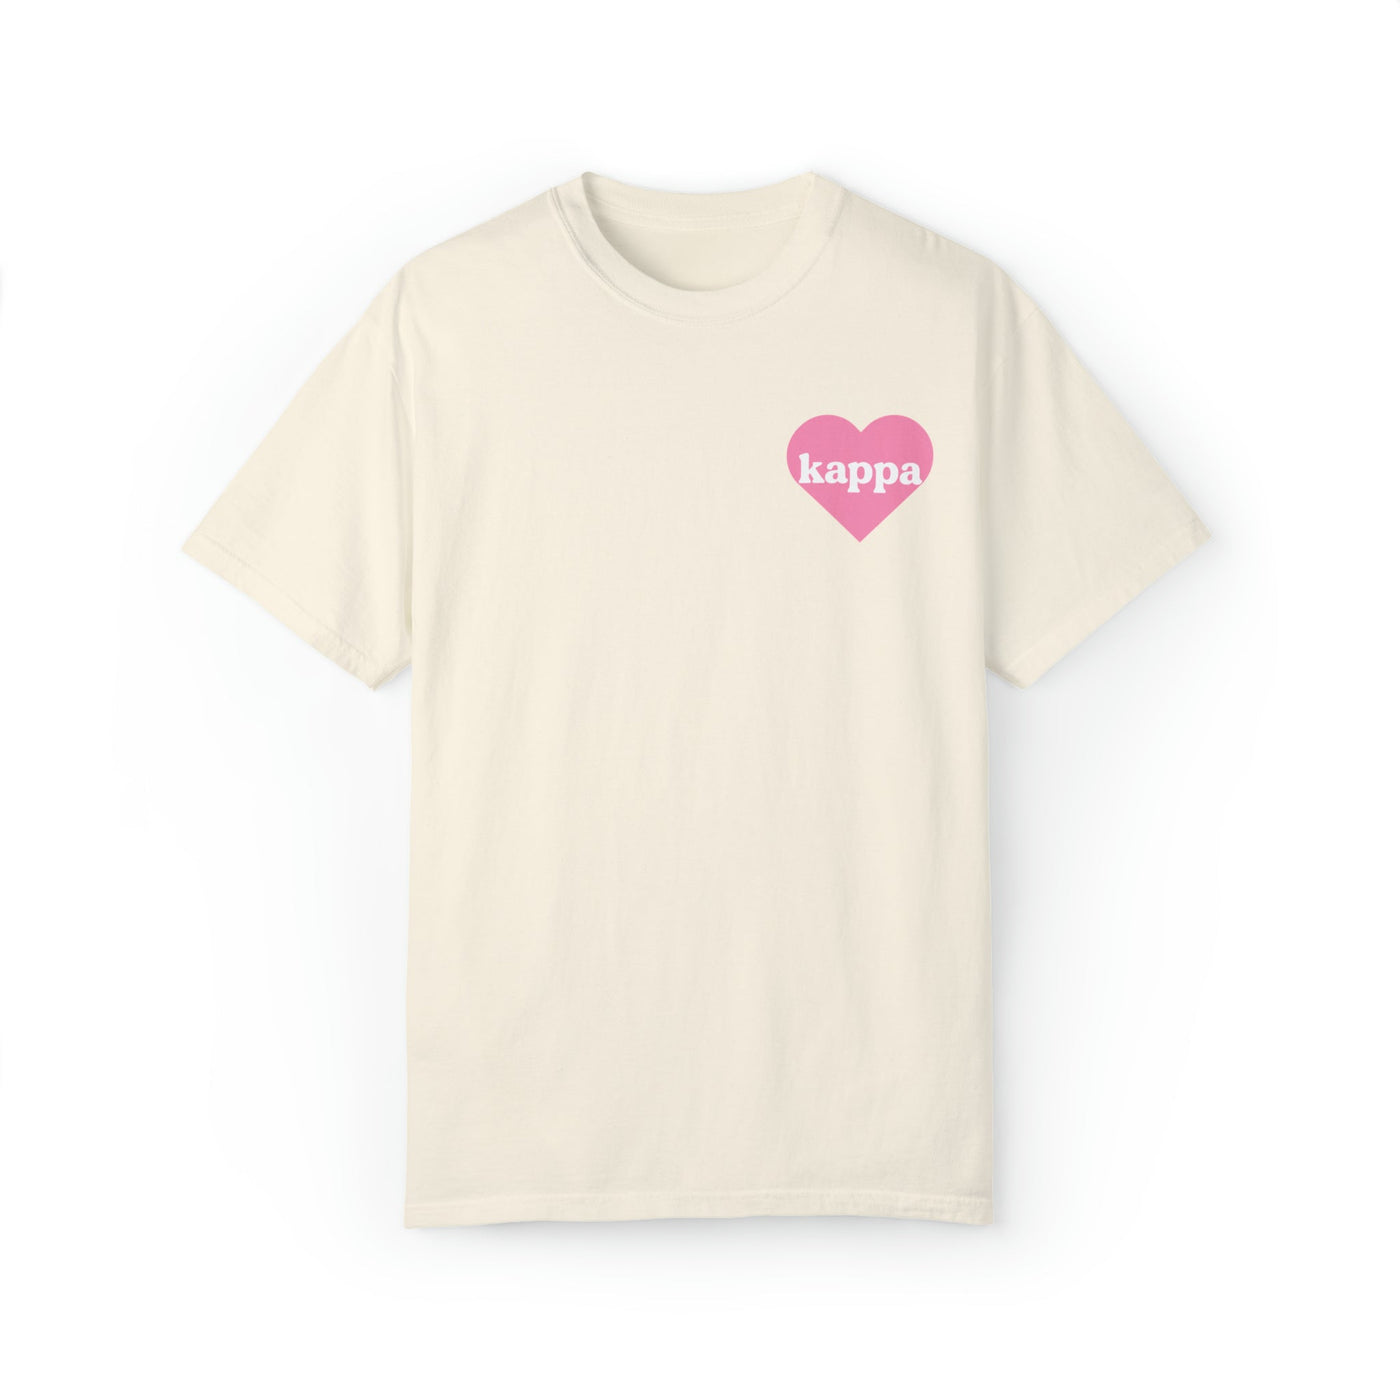 Kappa Kappa Gamma Grateful Flower Sorority T-shirt